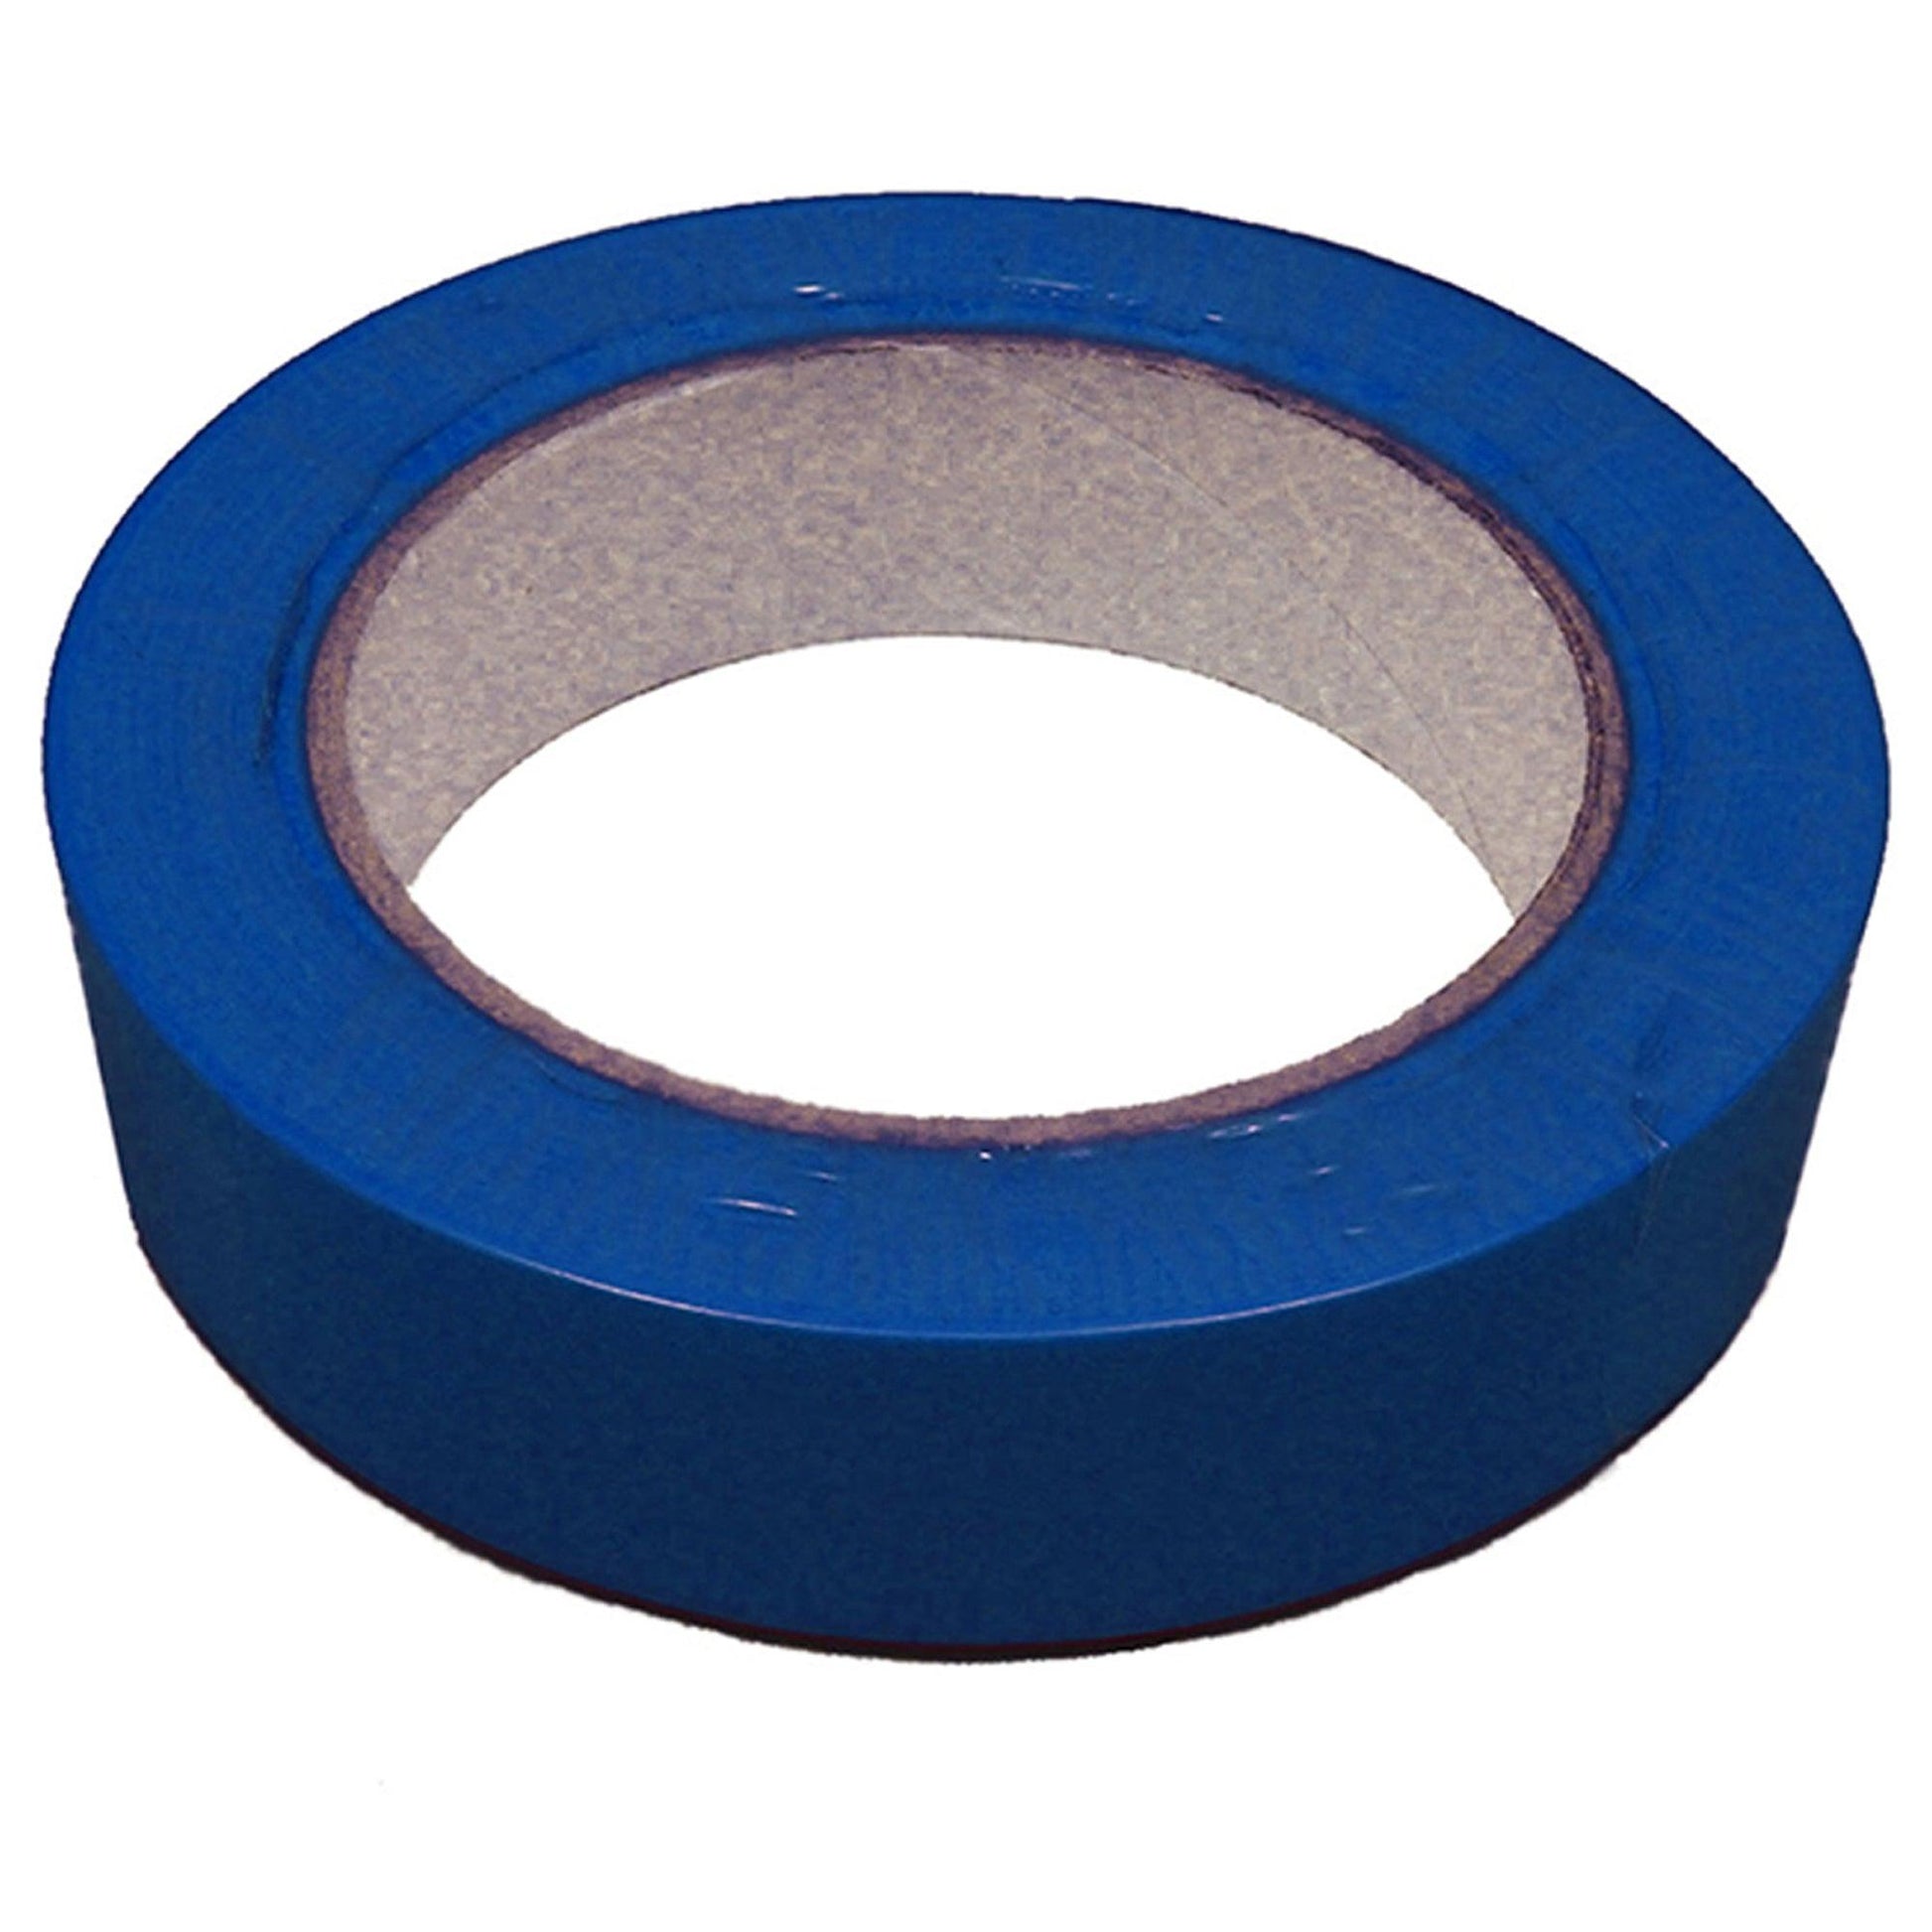 Floor Marking Tape, Royal Blue, 6 Rolls - Loomini